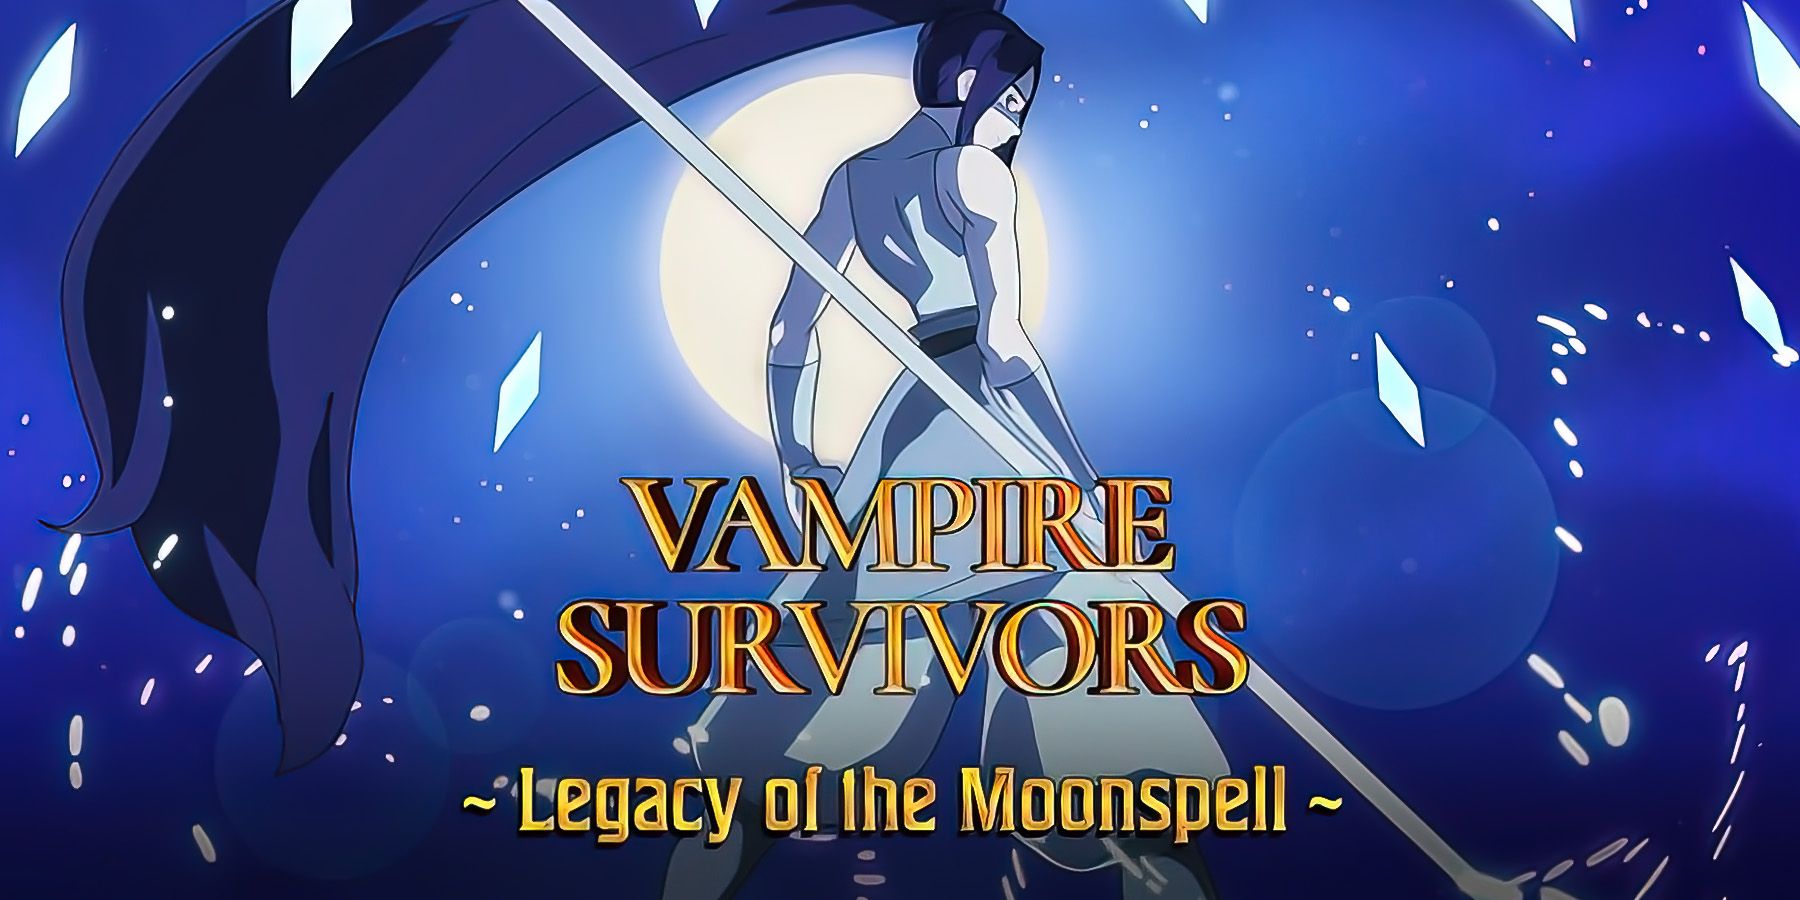 download the last version for ios Vampire Survivors